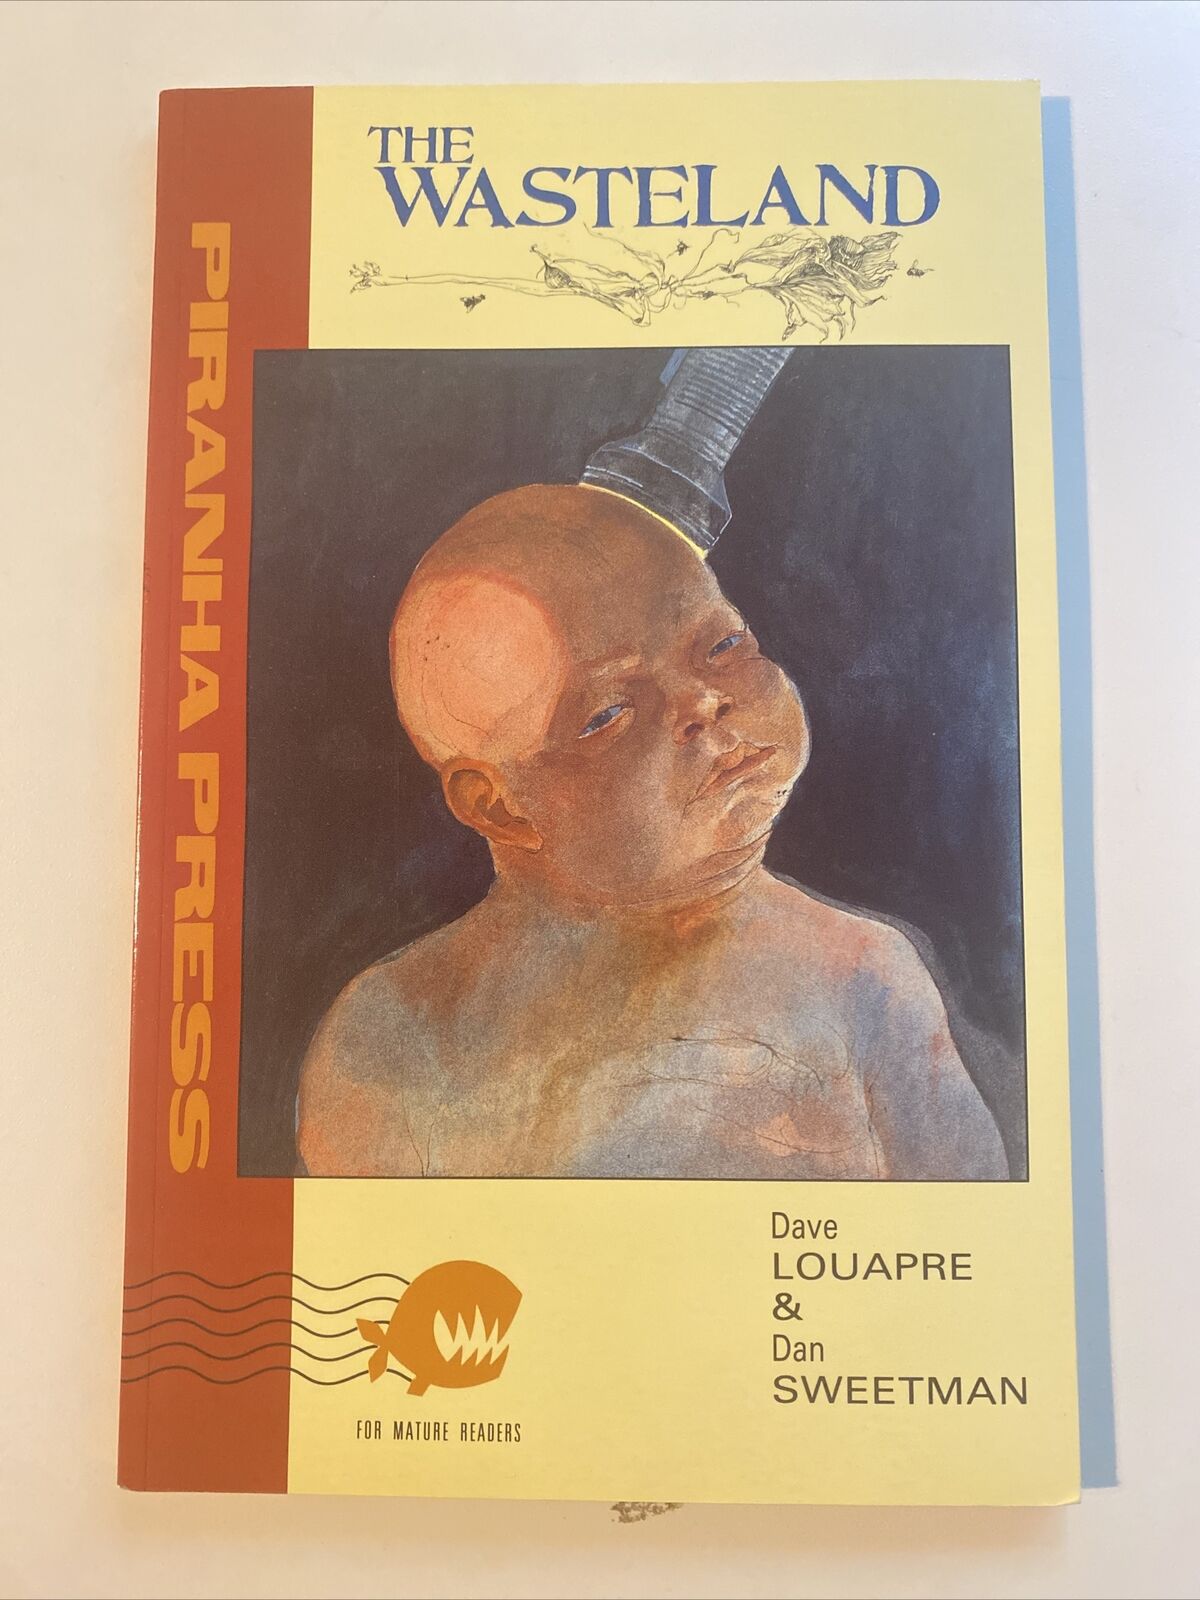 THE WASTELAND Dave Louapre & Dan Sweetman PIRANHA PRESS 1989